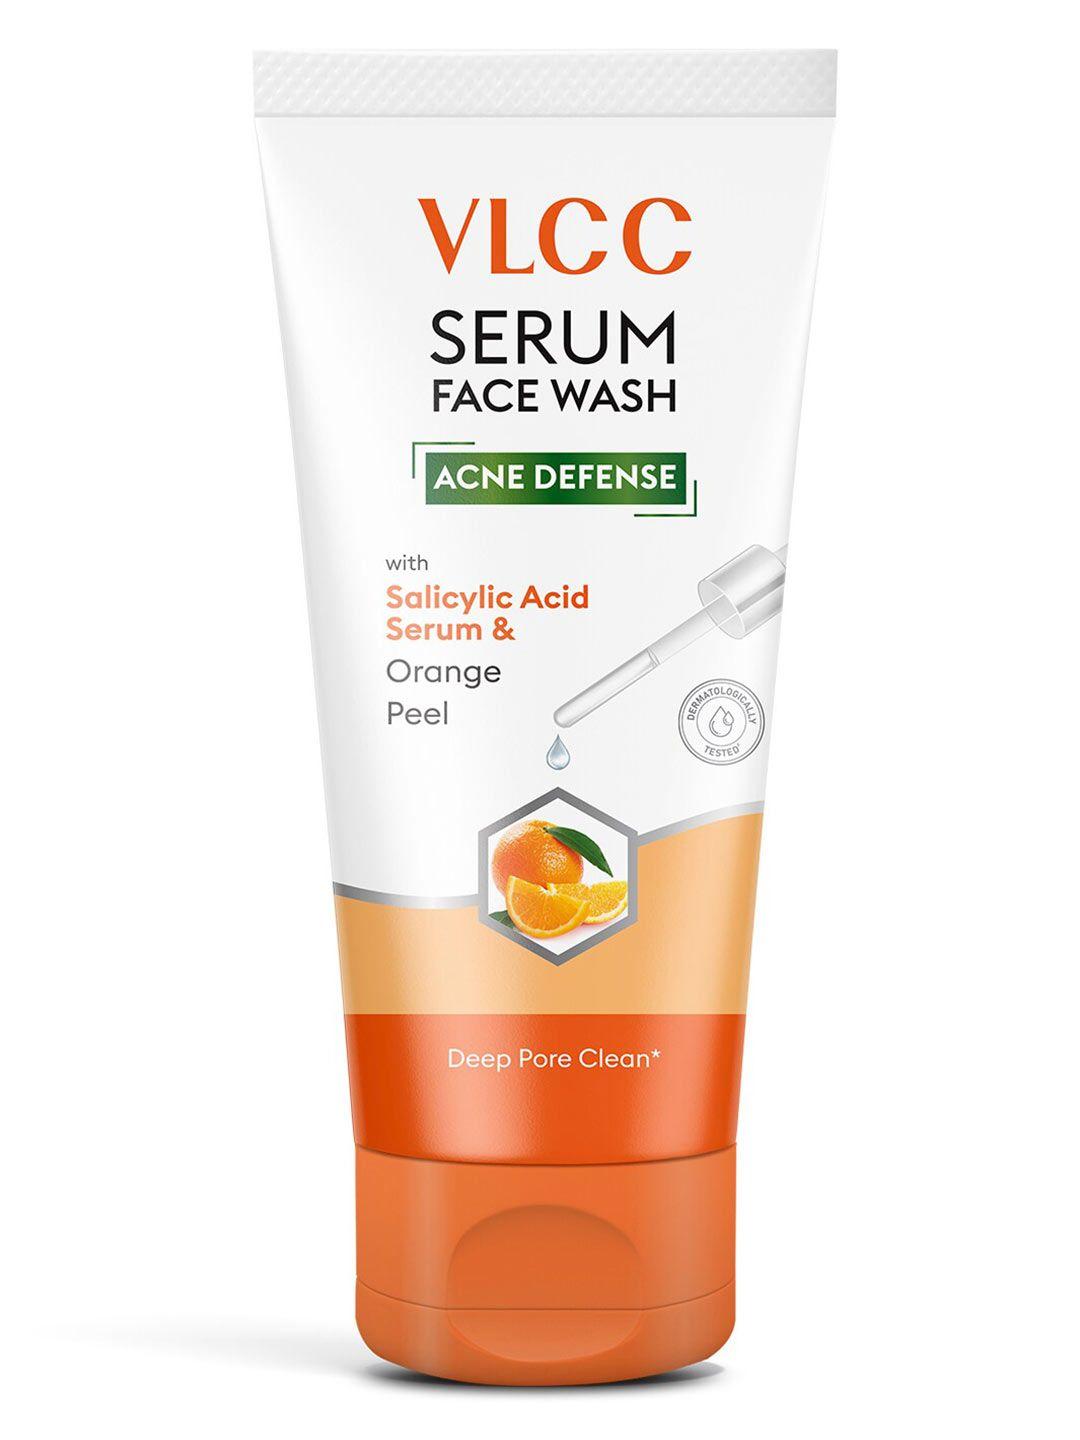 vlcc acne defense serum face wash with salicylic acid serum & orange - 100ml